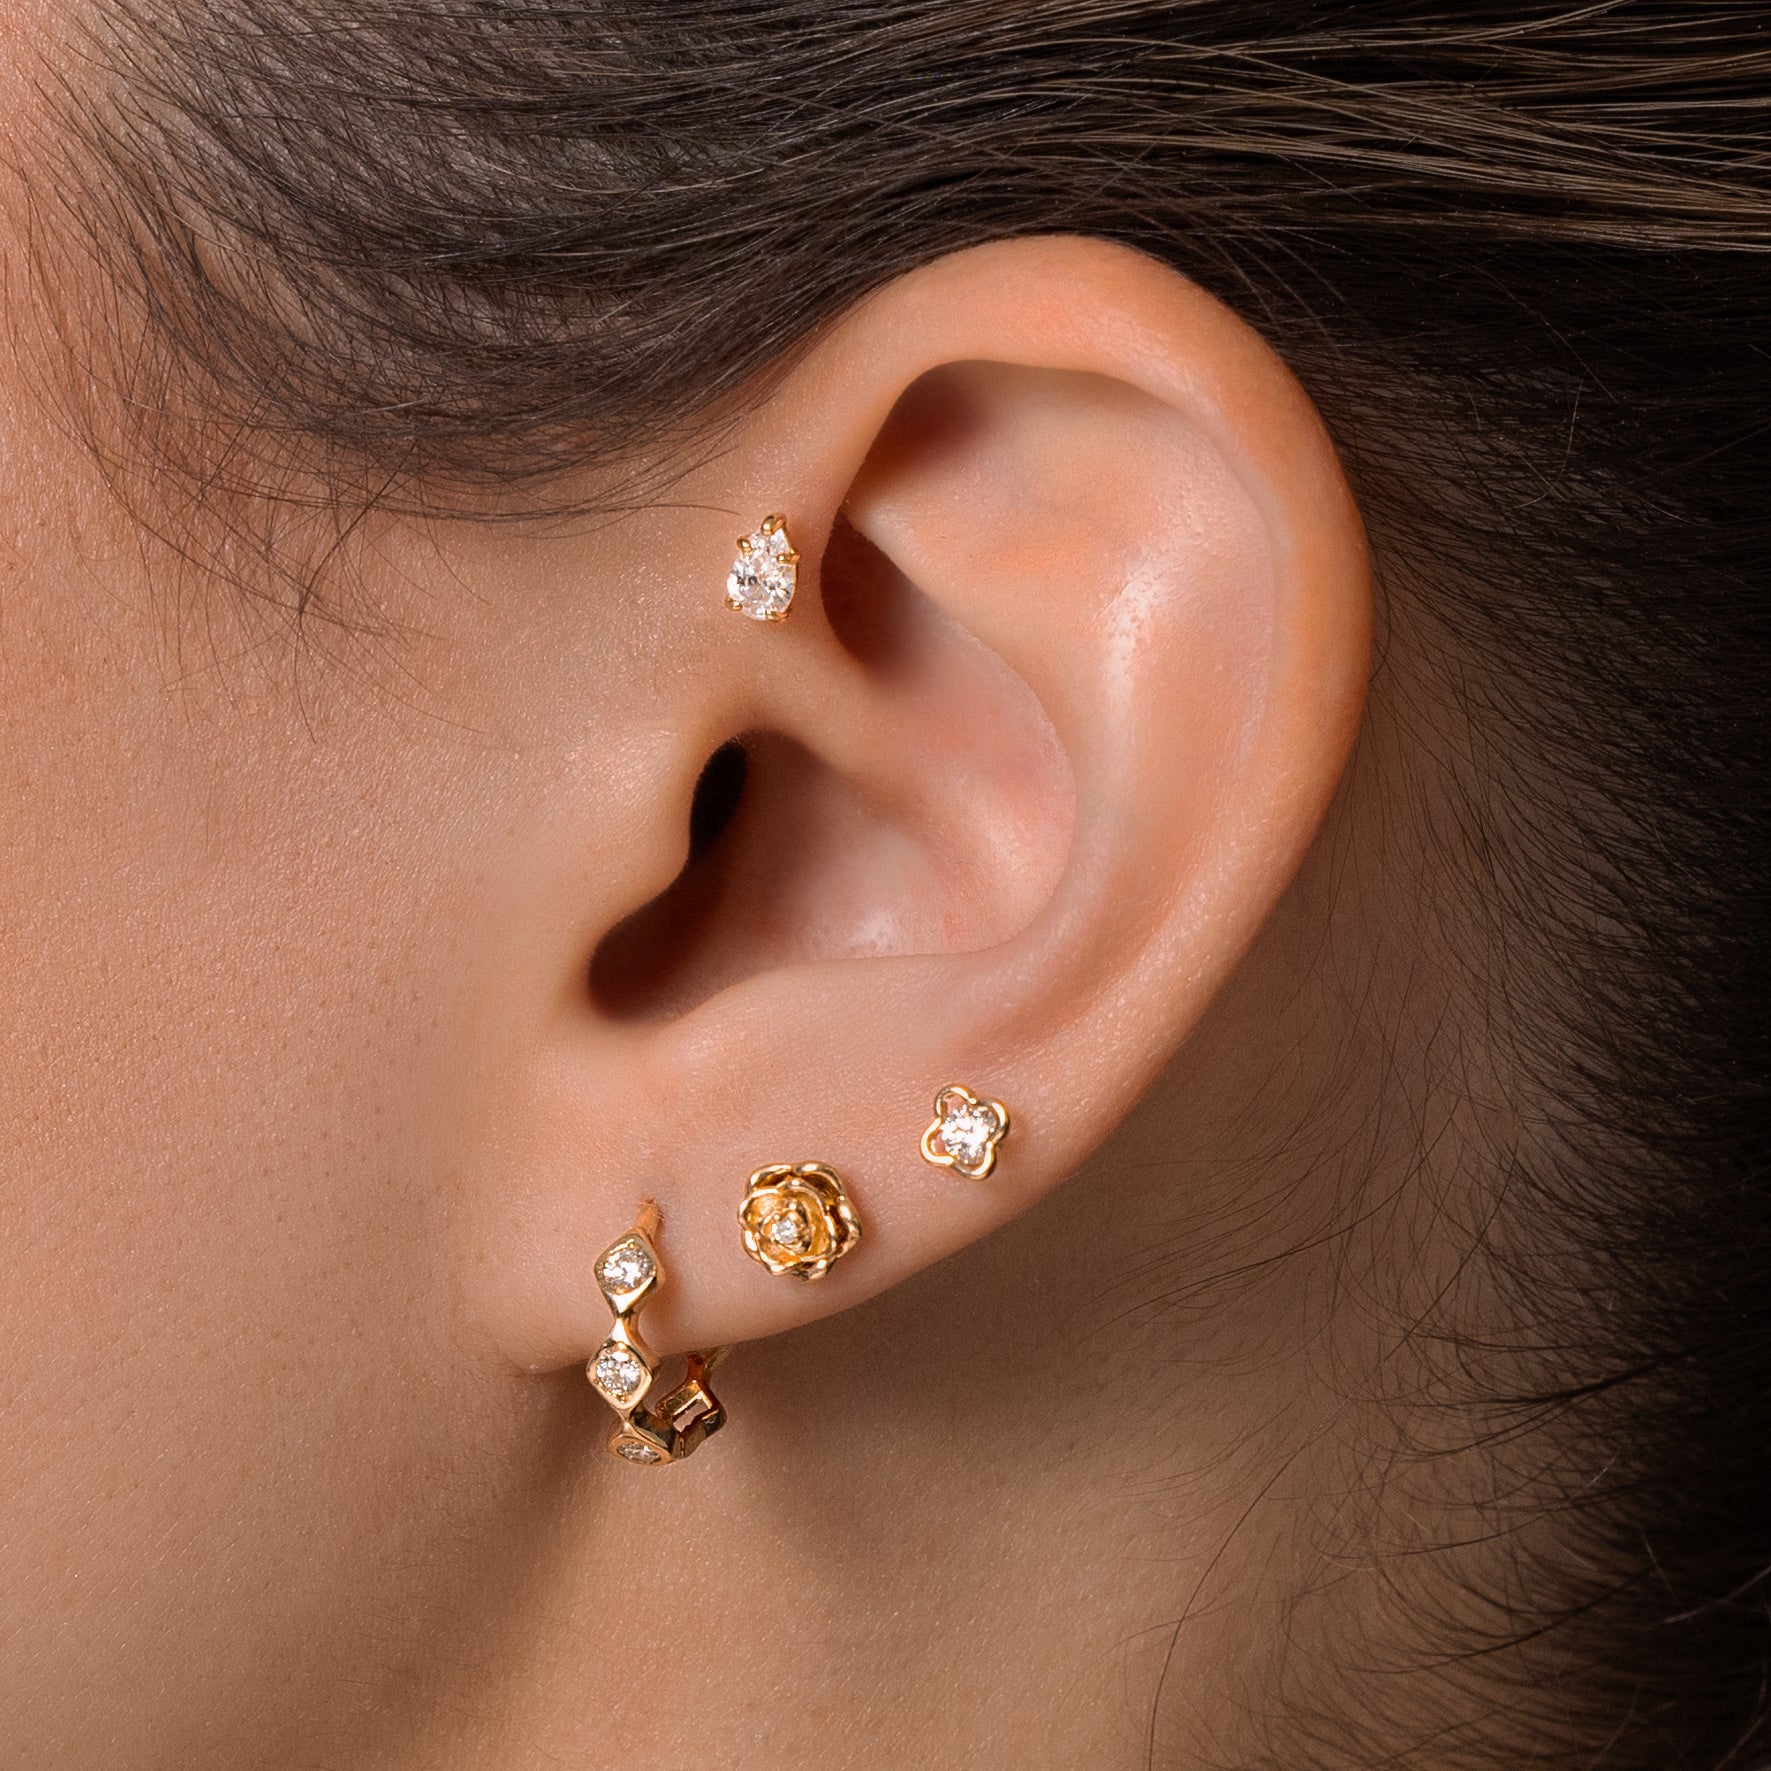 14K Solid Gold Teardrop Cubic Zirconia Stud Piercing Earring - Anygolds 